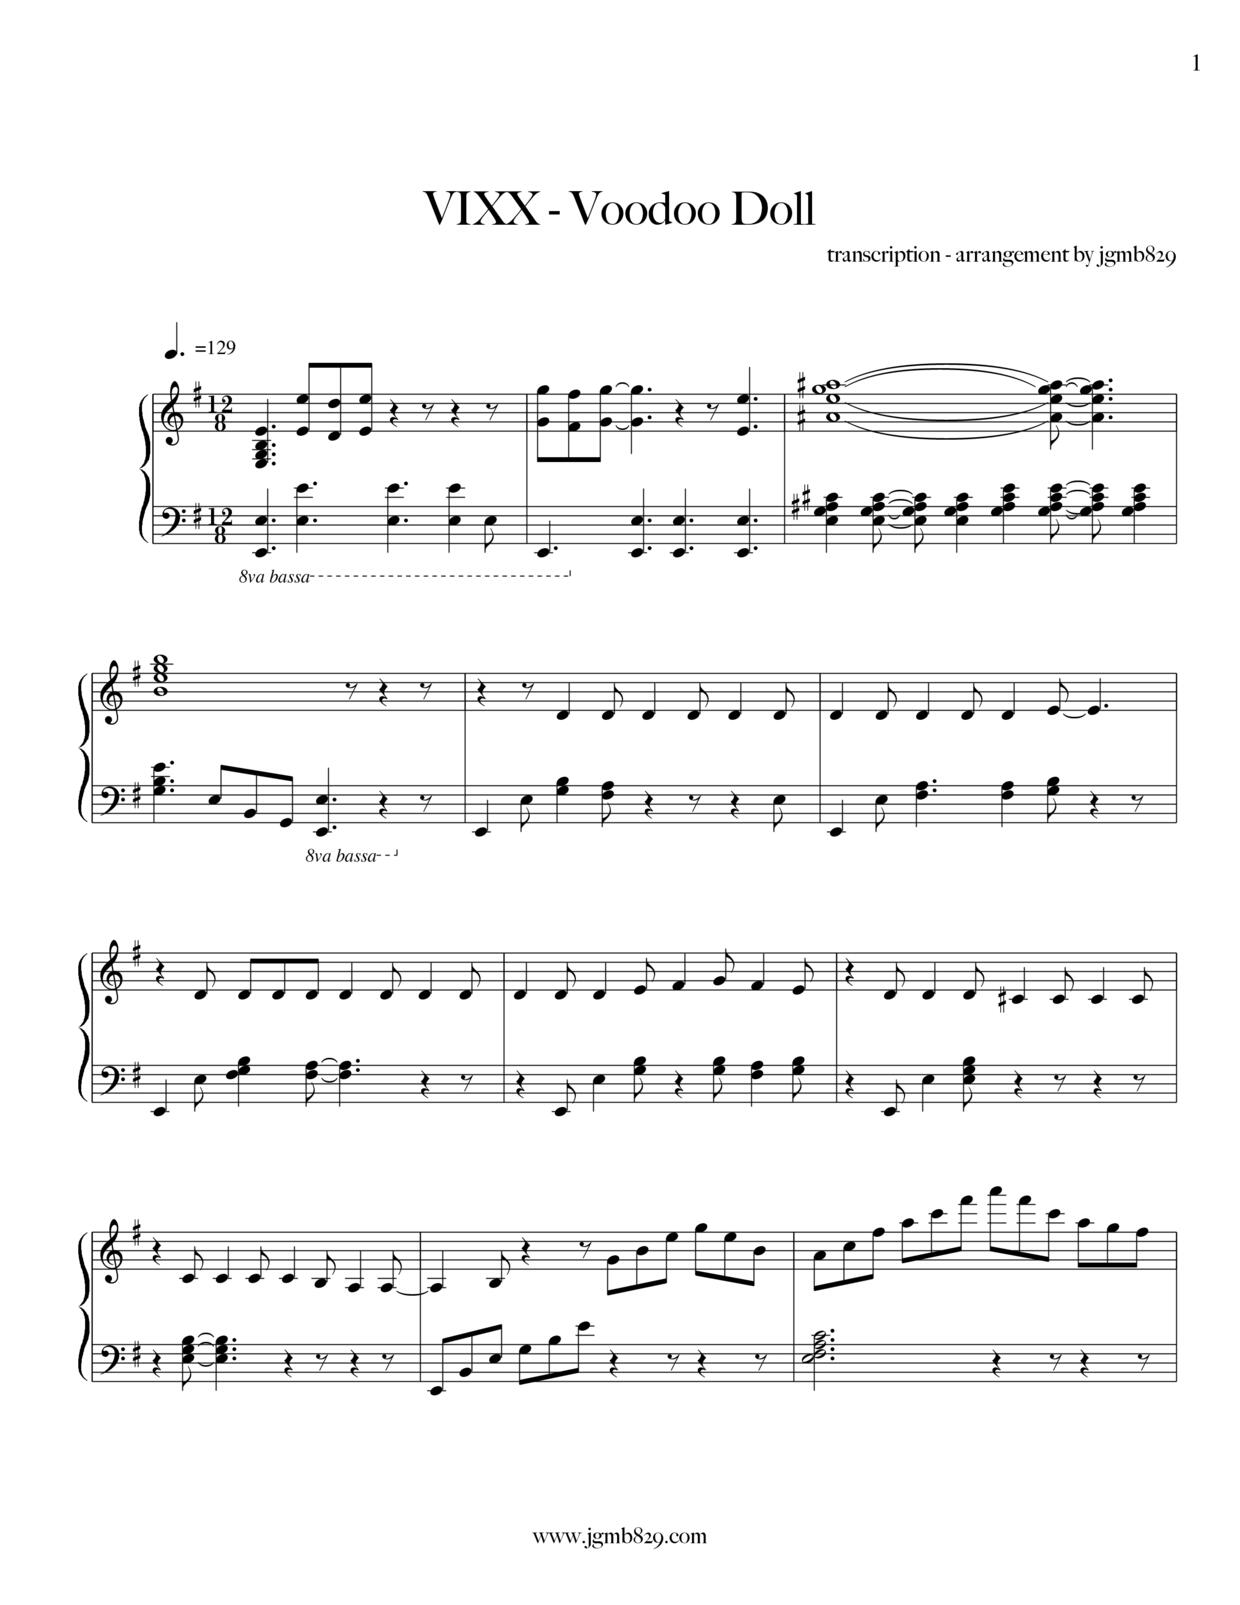 Voodoo Doll Score